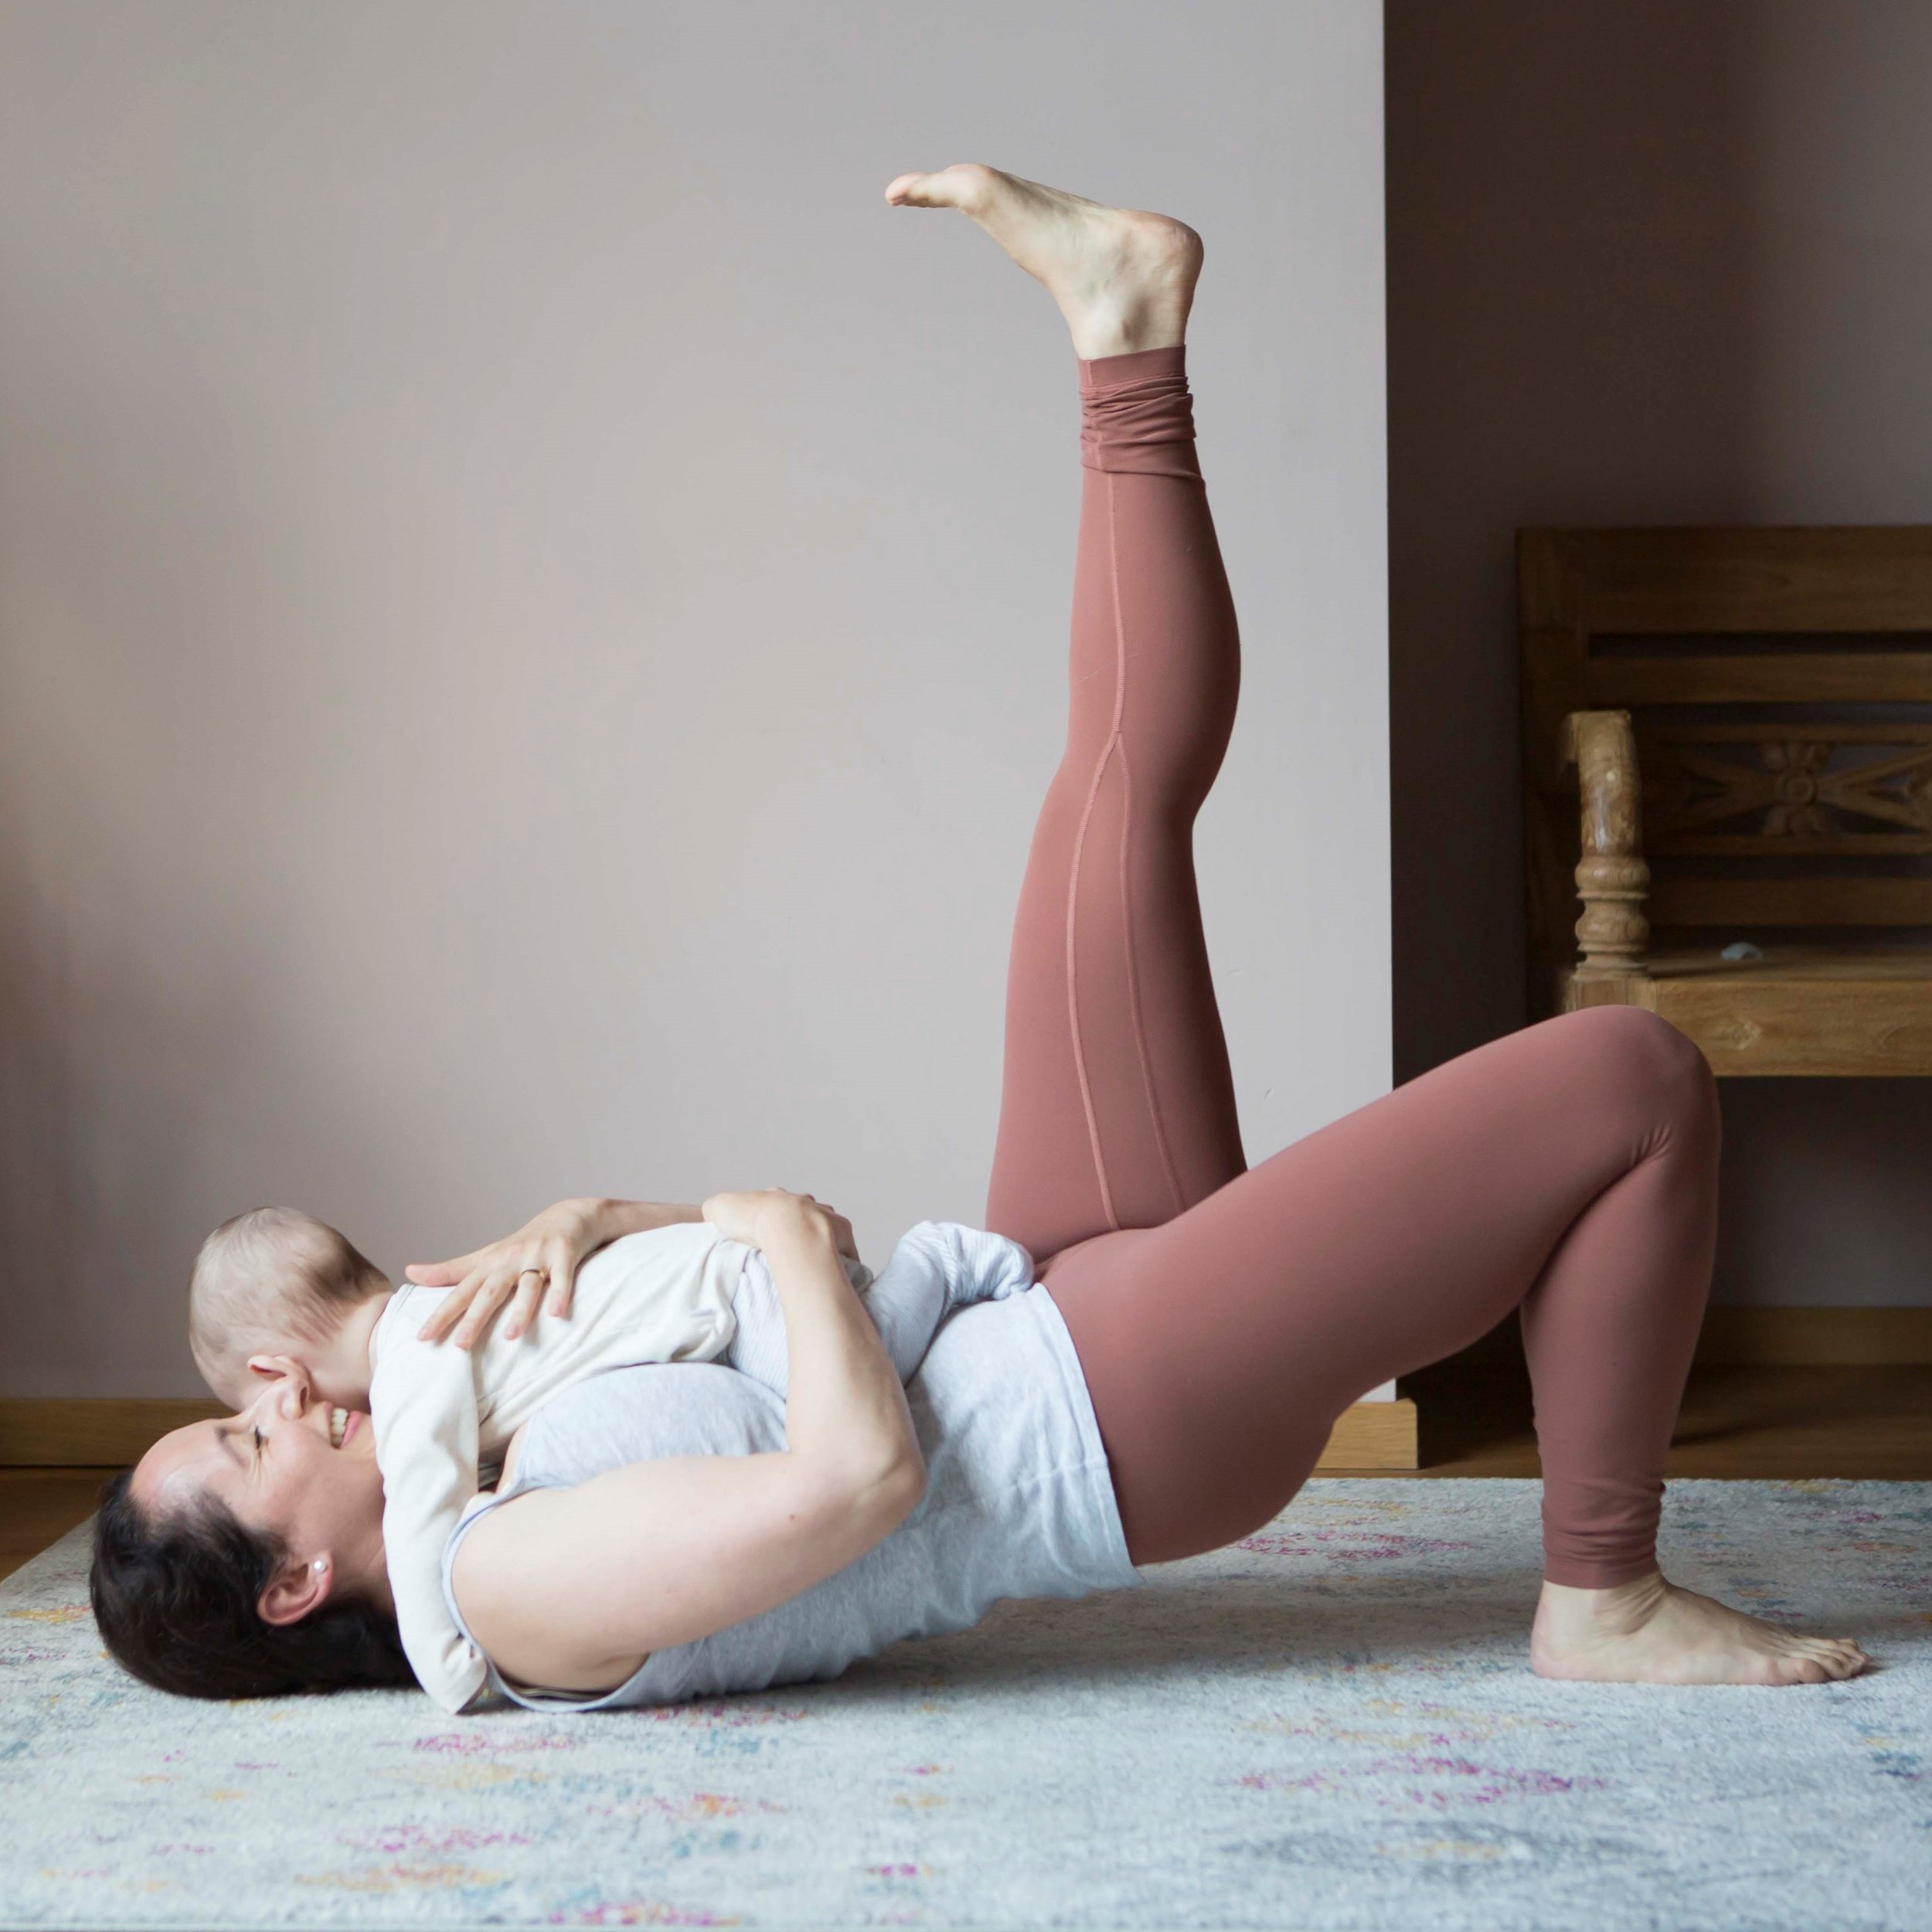 Postnatal Practices - Yoga Course